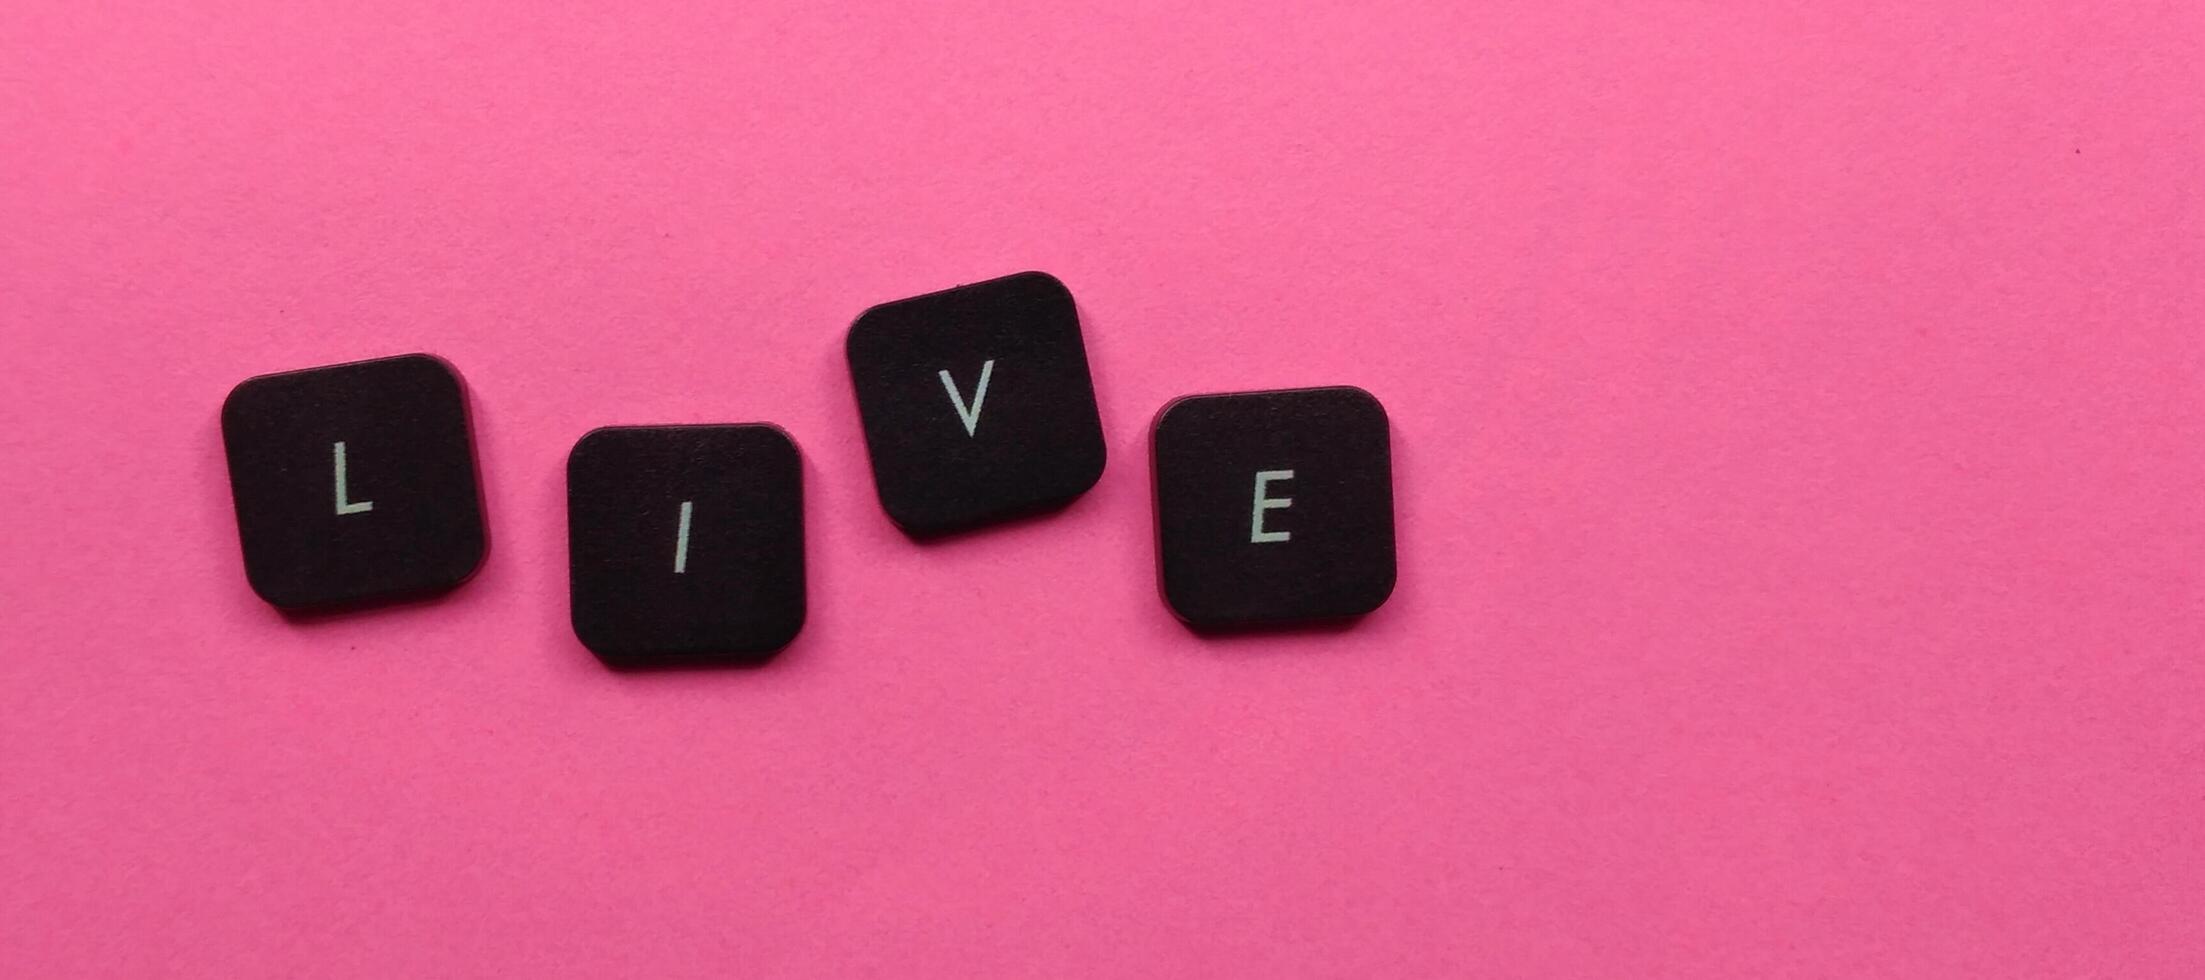 leva ord tillverkad av svart kuber på rosa bakgrund, topp se. foto